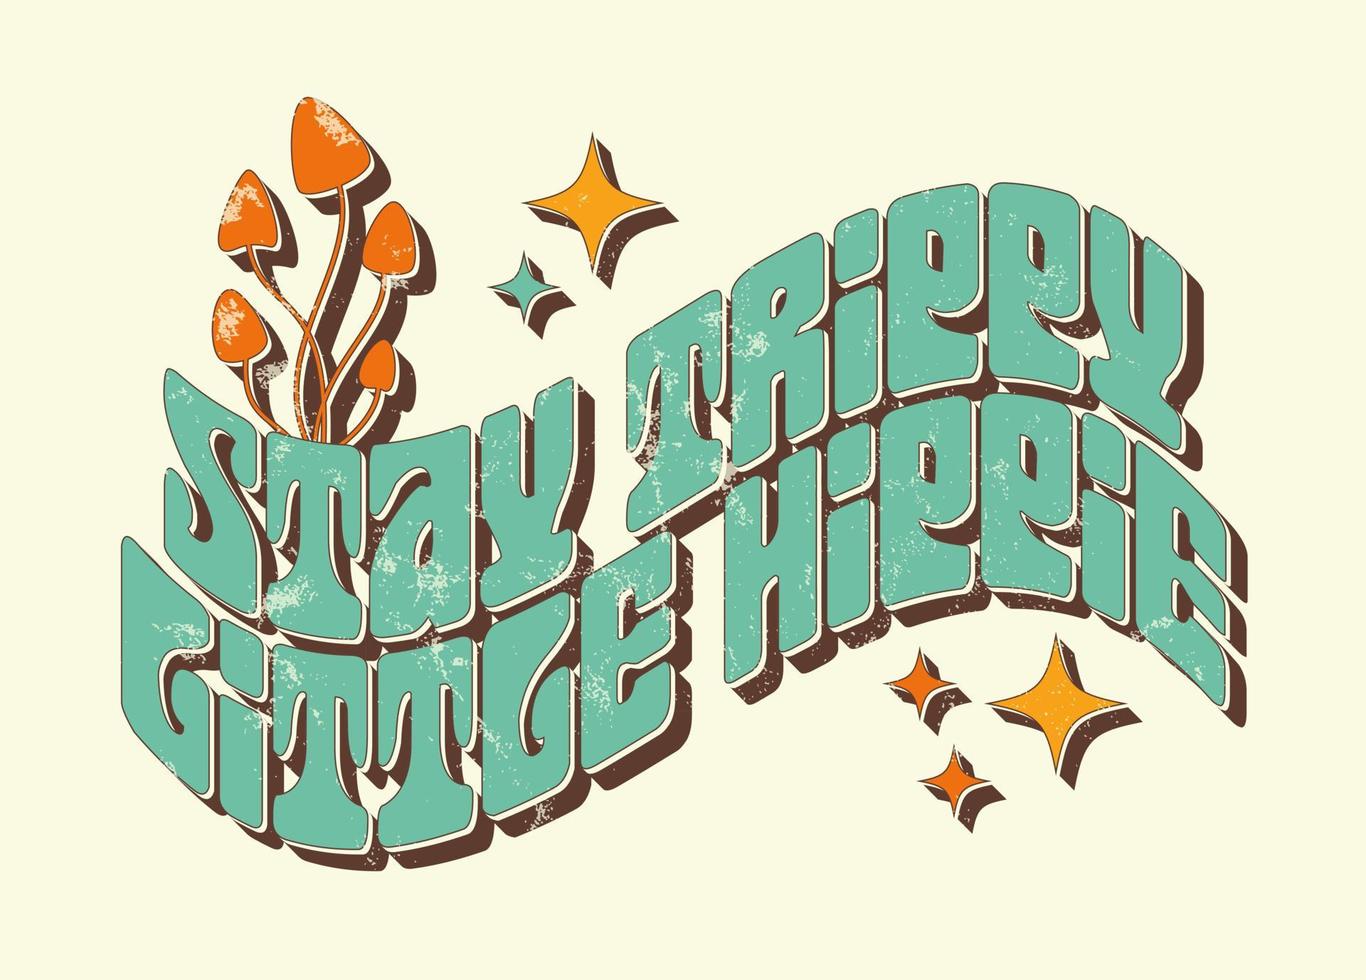 Stay trippy little hippie, groovy hippie slogan. 1970 print for graphic tee vector